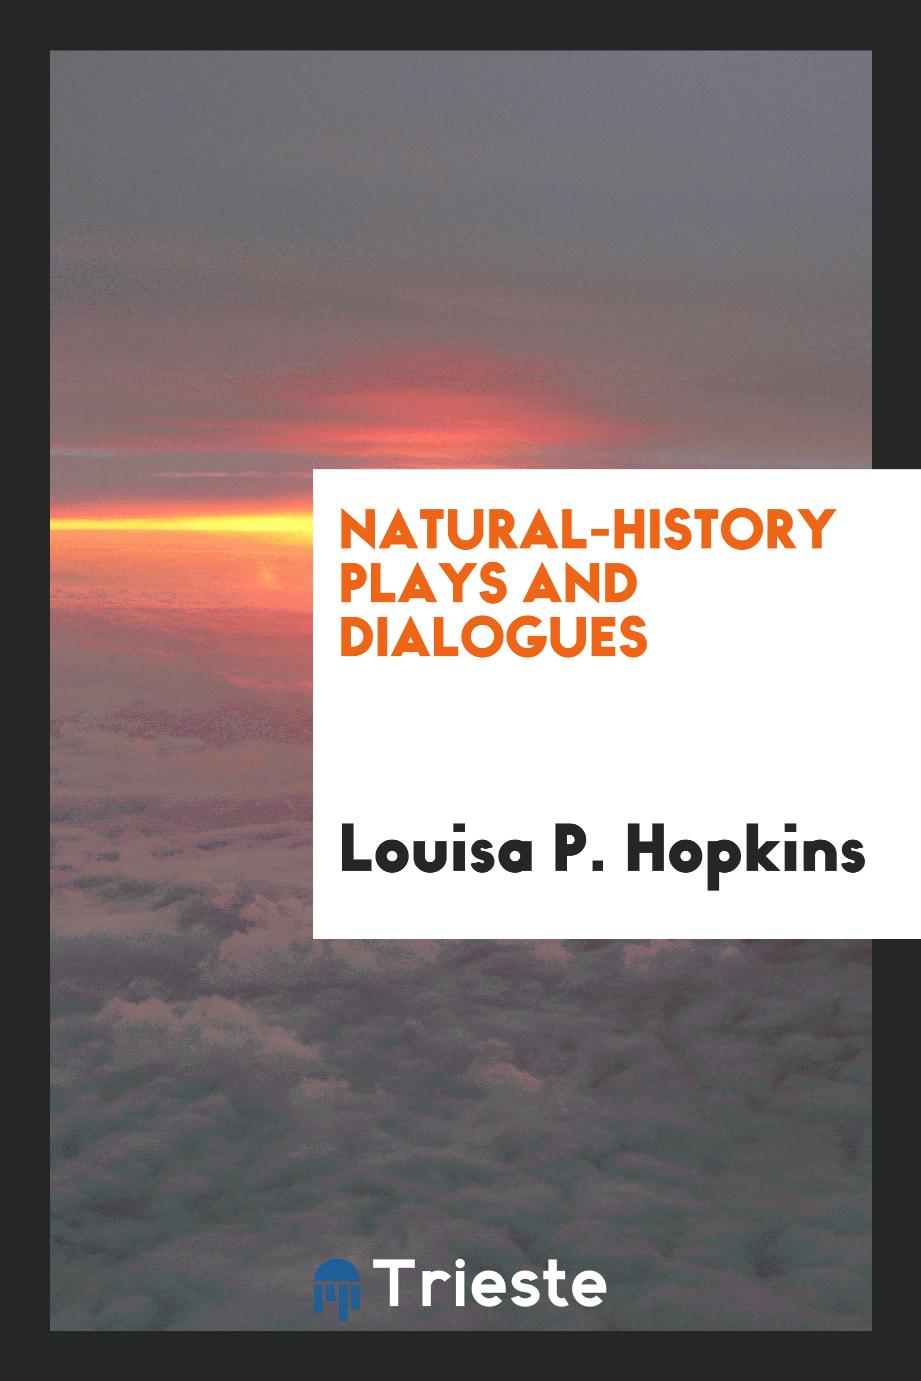 Natural-History Plays and Dialogues